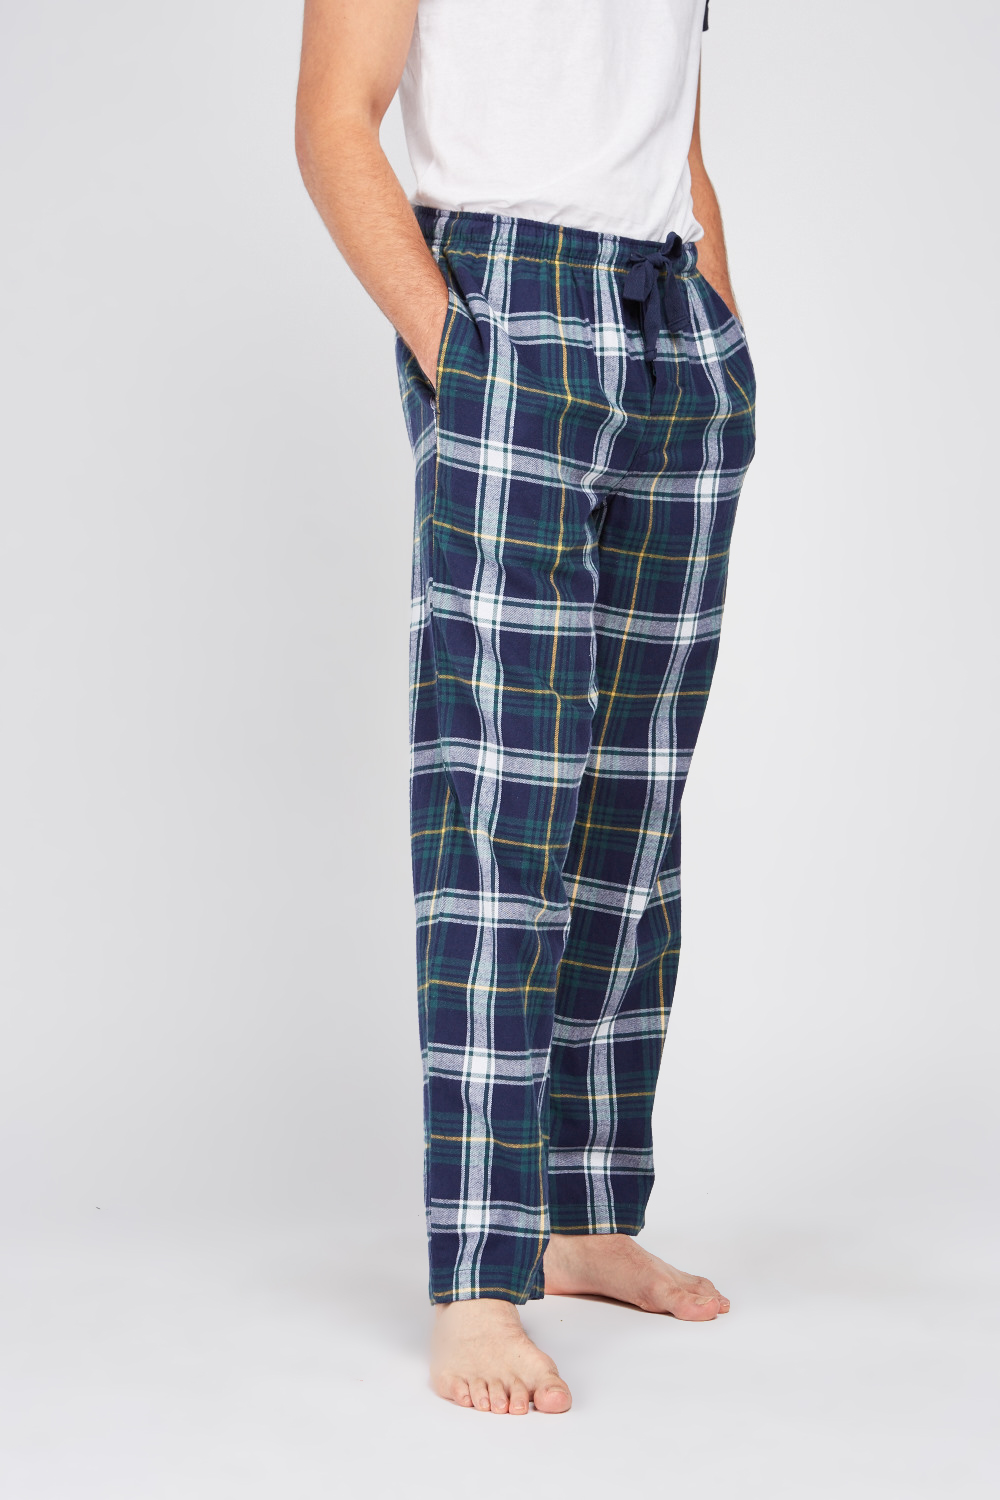 Tartan Print Pyjama Bottoms - Just $6